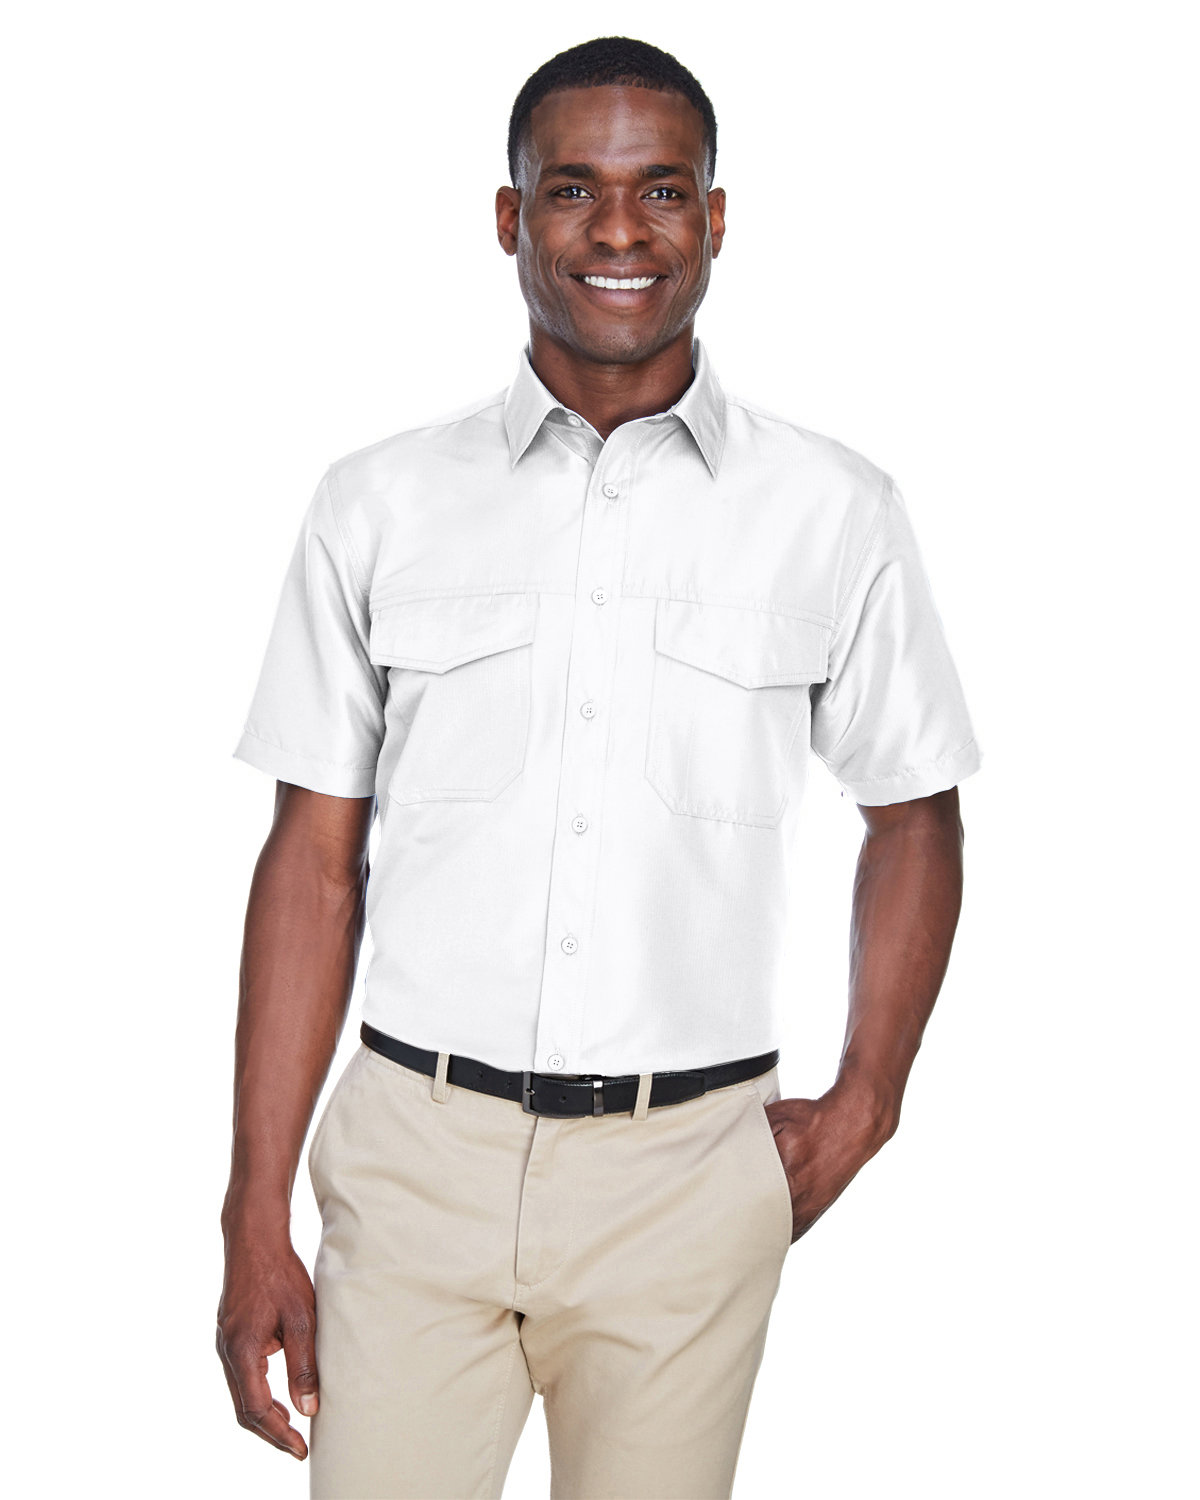 Men's Key West Short-Sleeve Performance Staff Shirt - M580